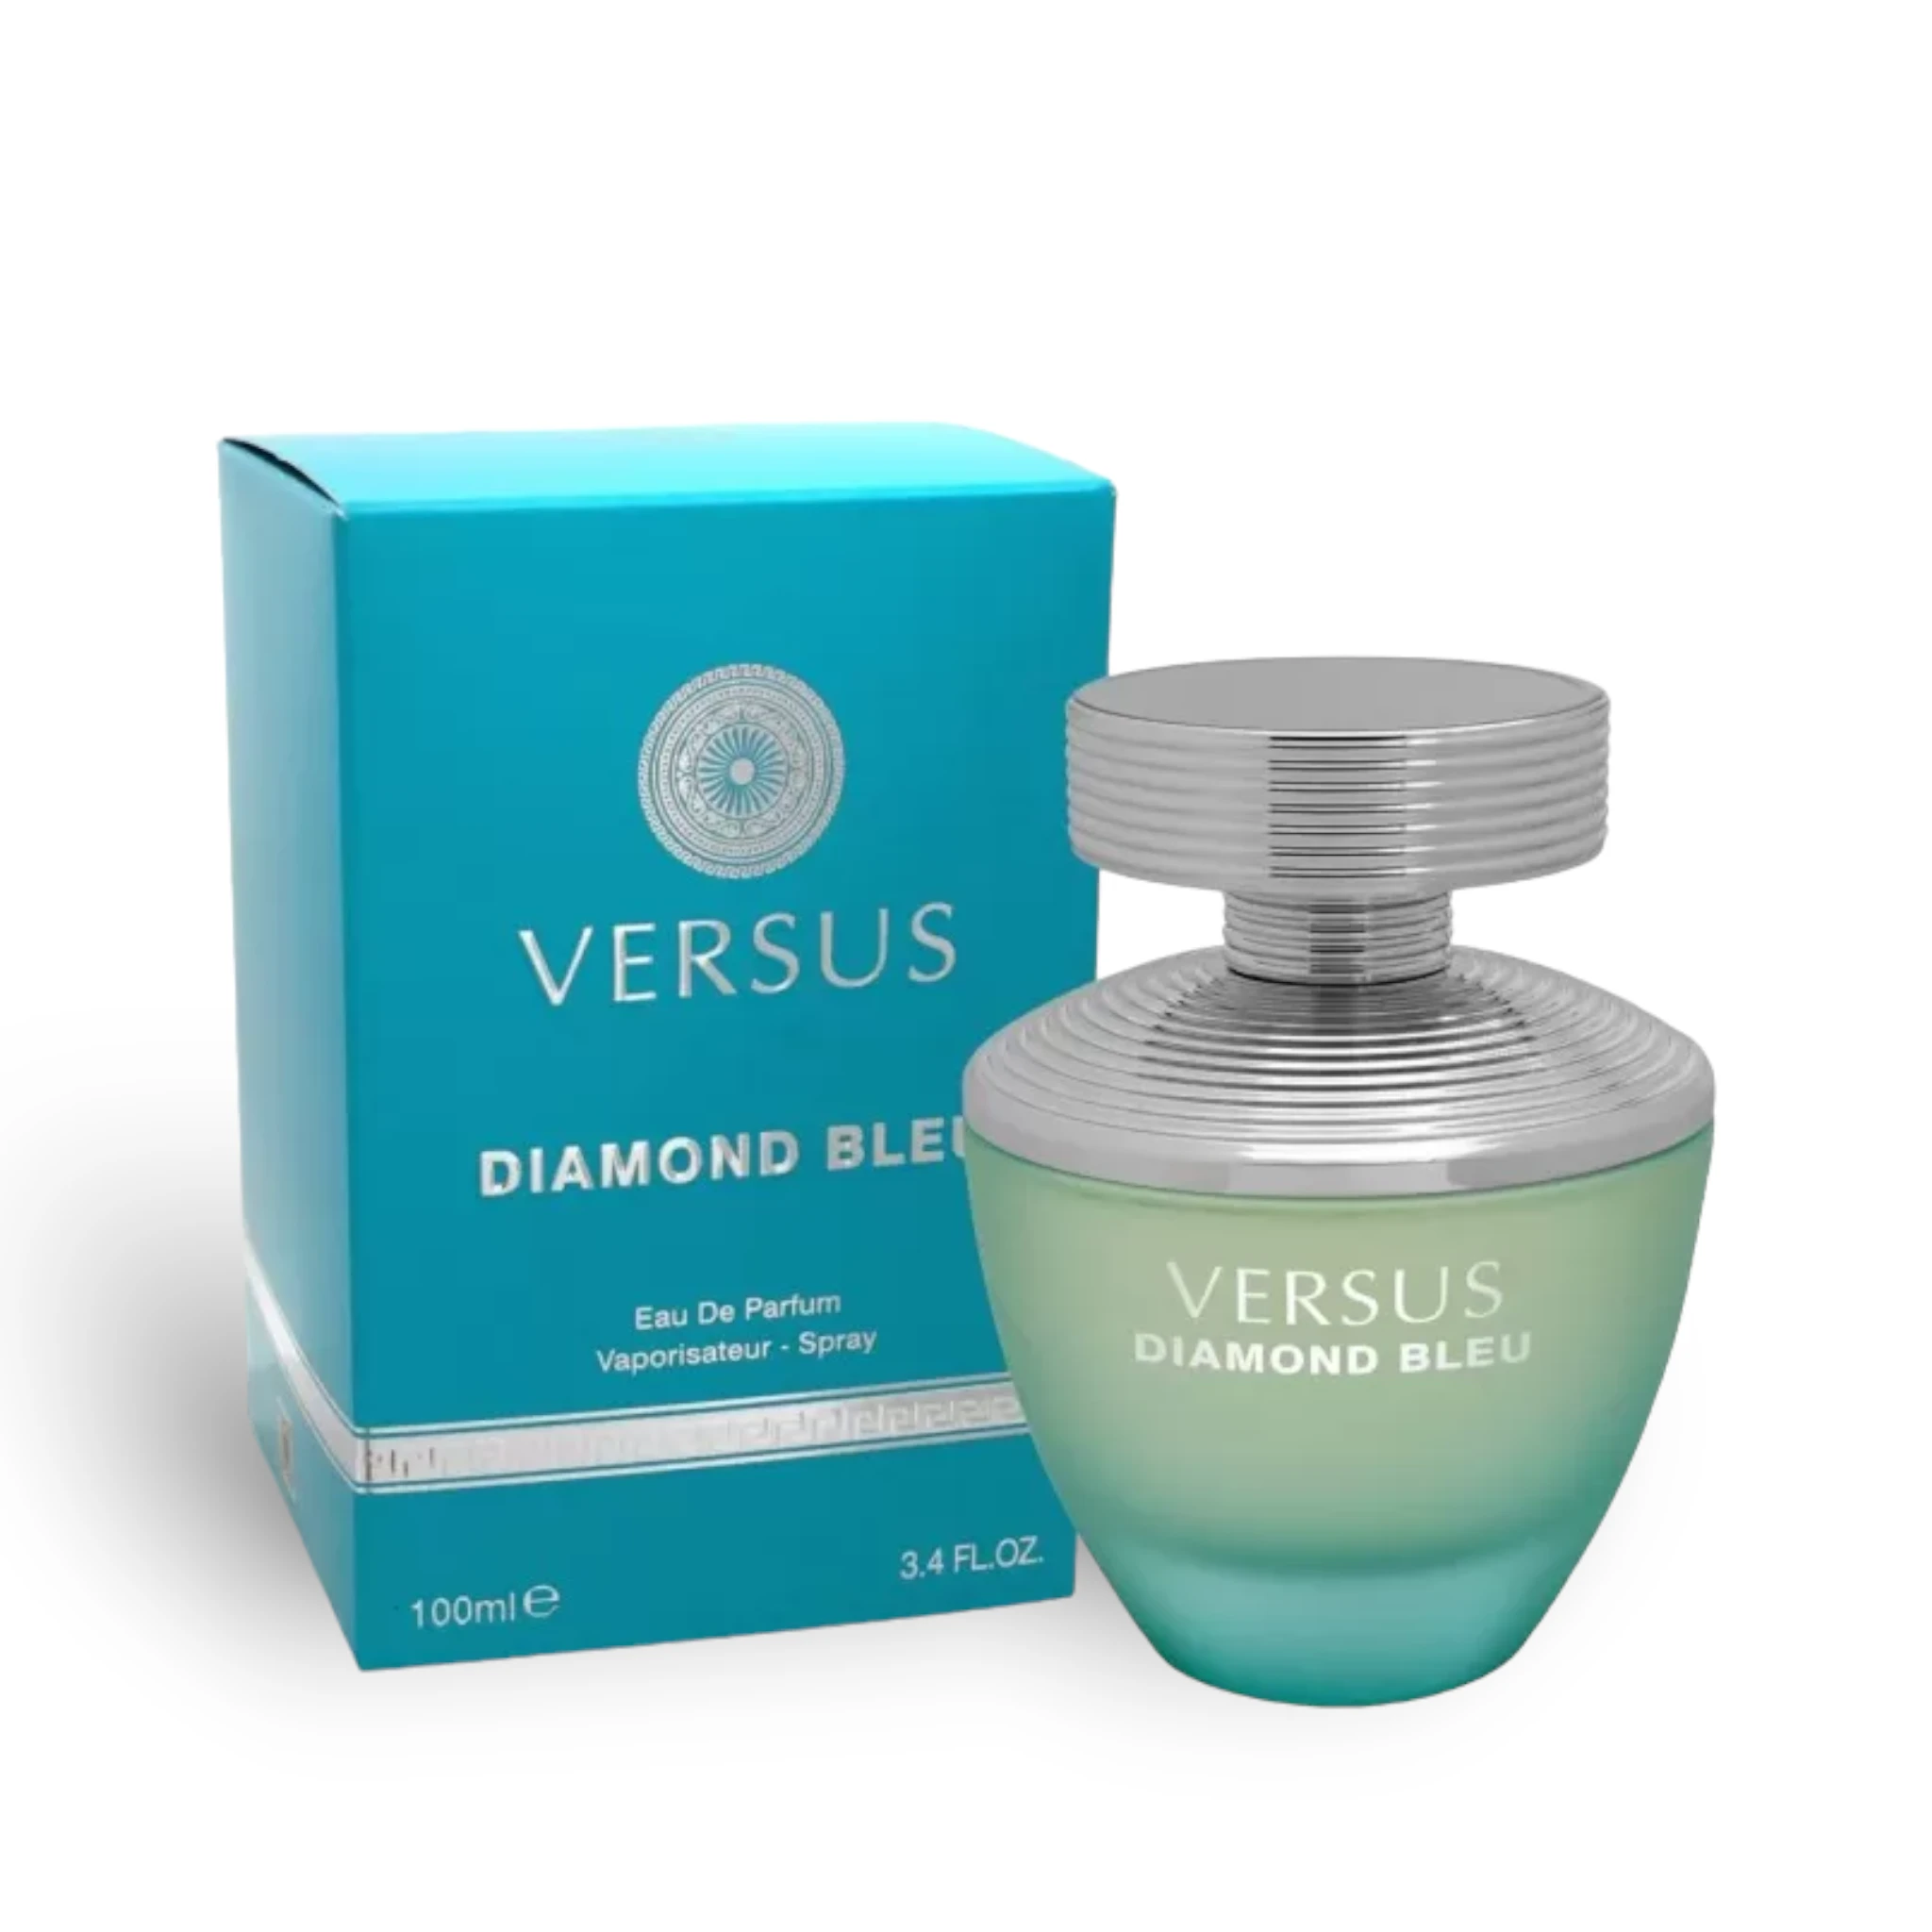 Versus Diamond Bleu Perfume Eau De Parfum 100Ml By Fragrance World